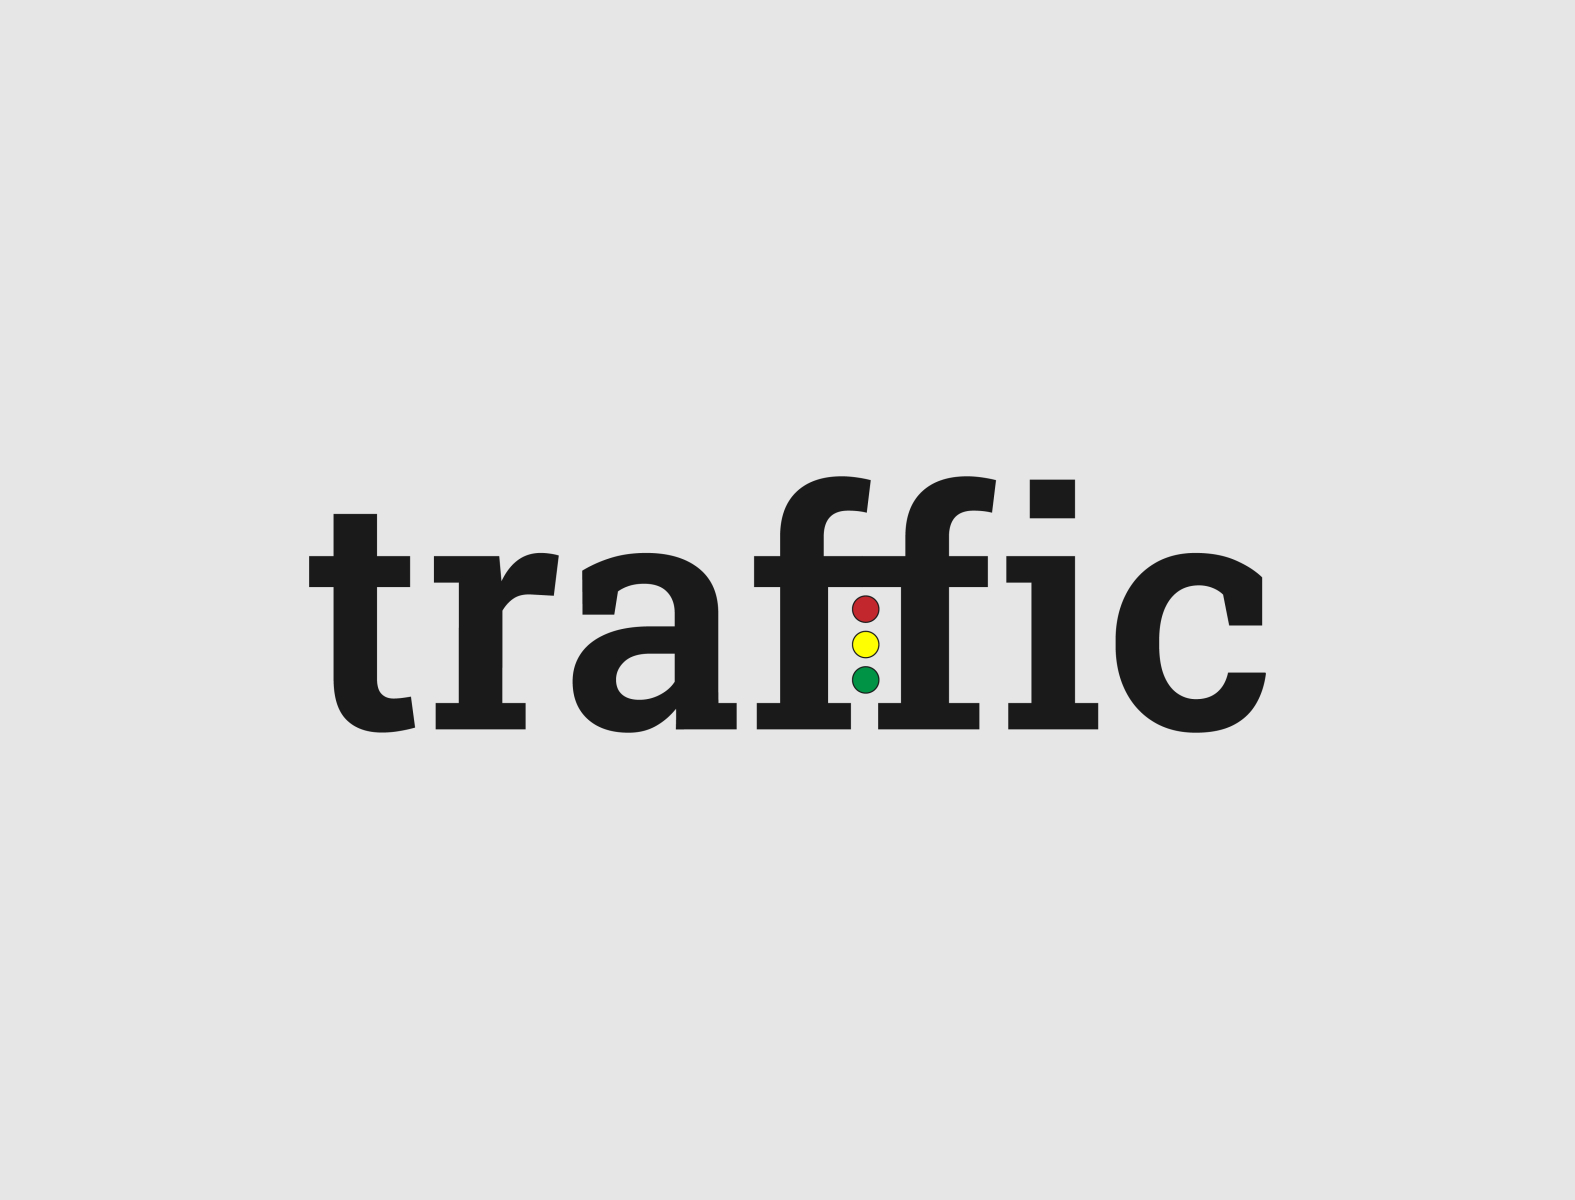 Traffic sign Logo, traffic signage, flag, text png | PNGEgg